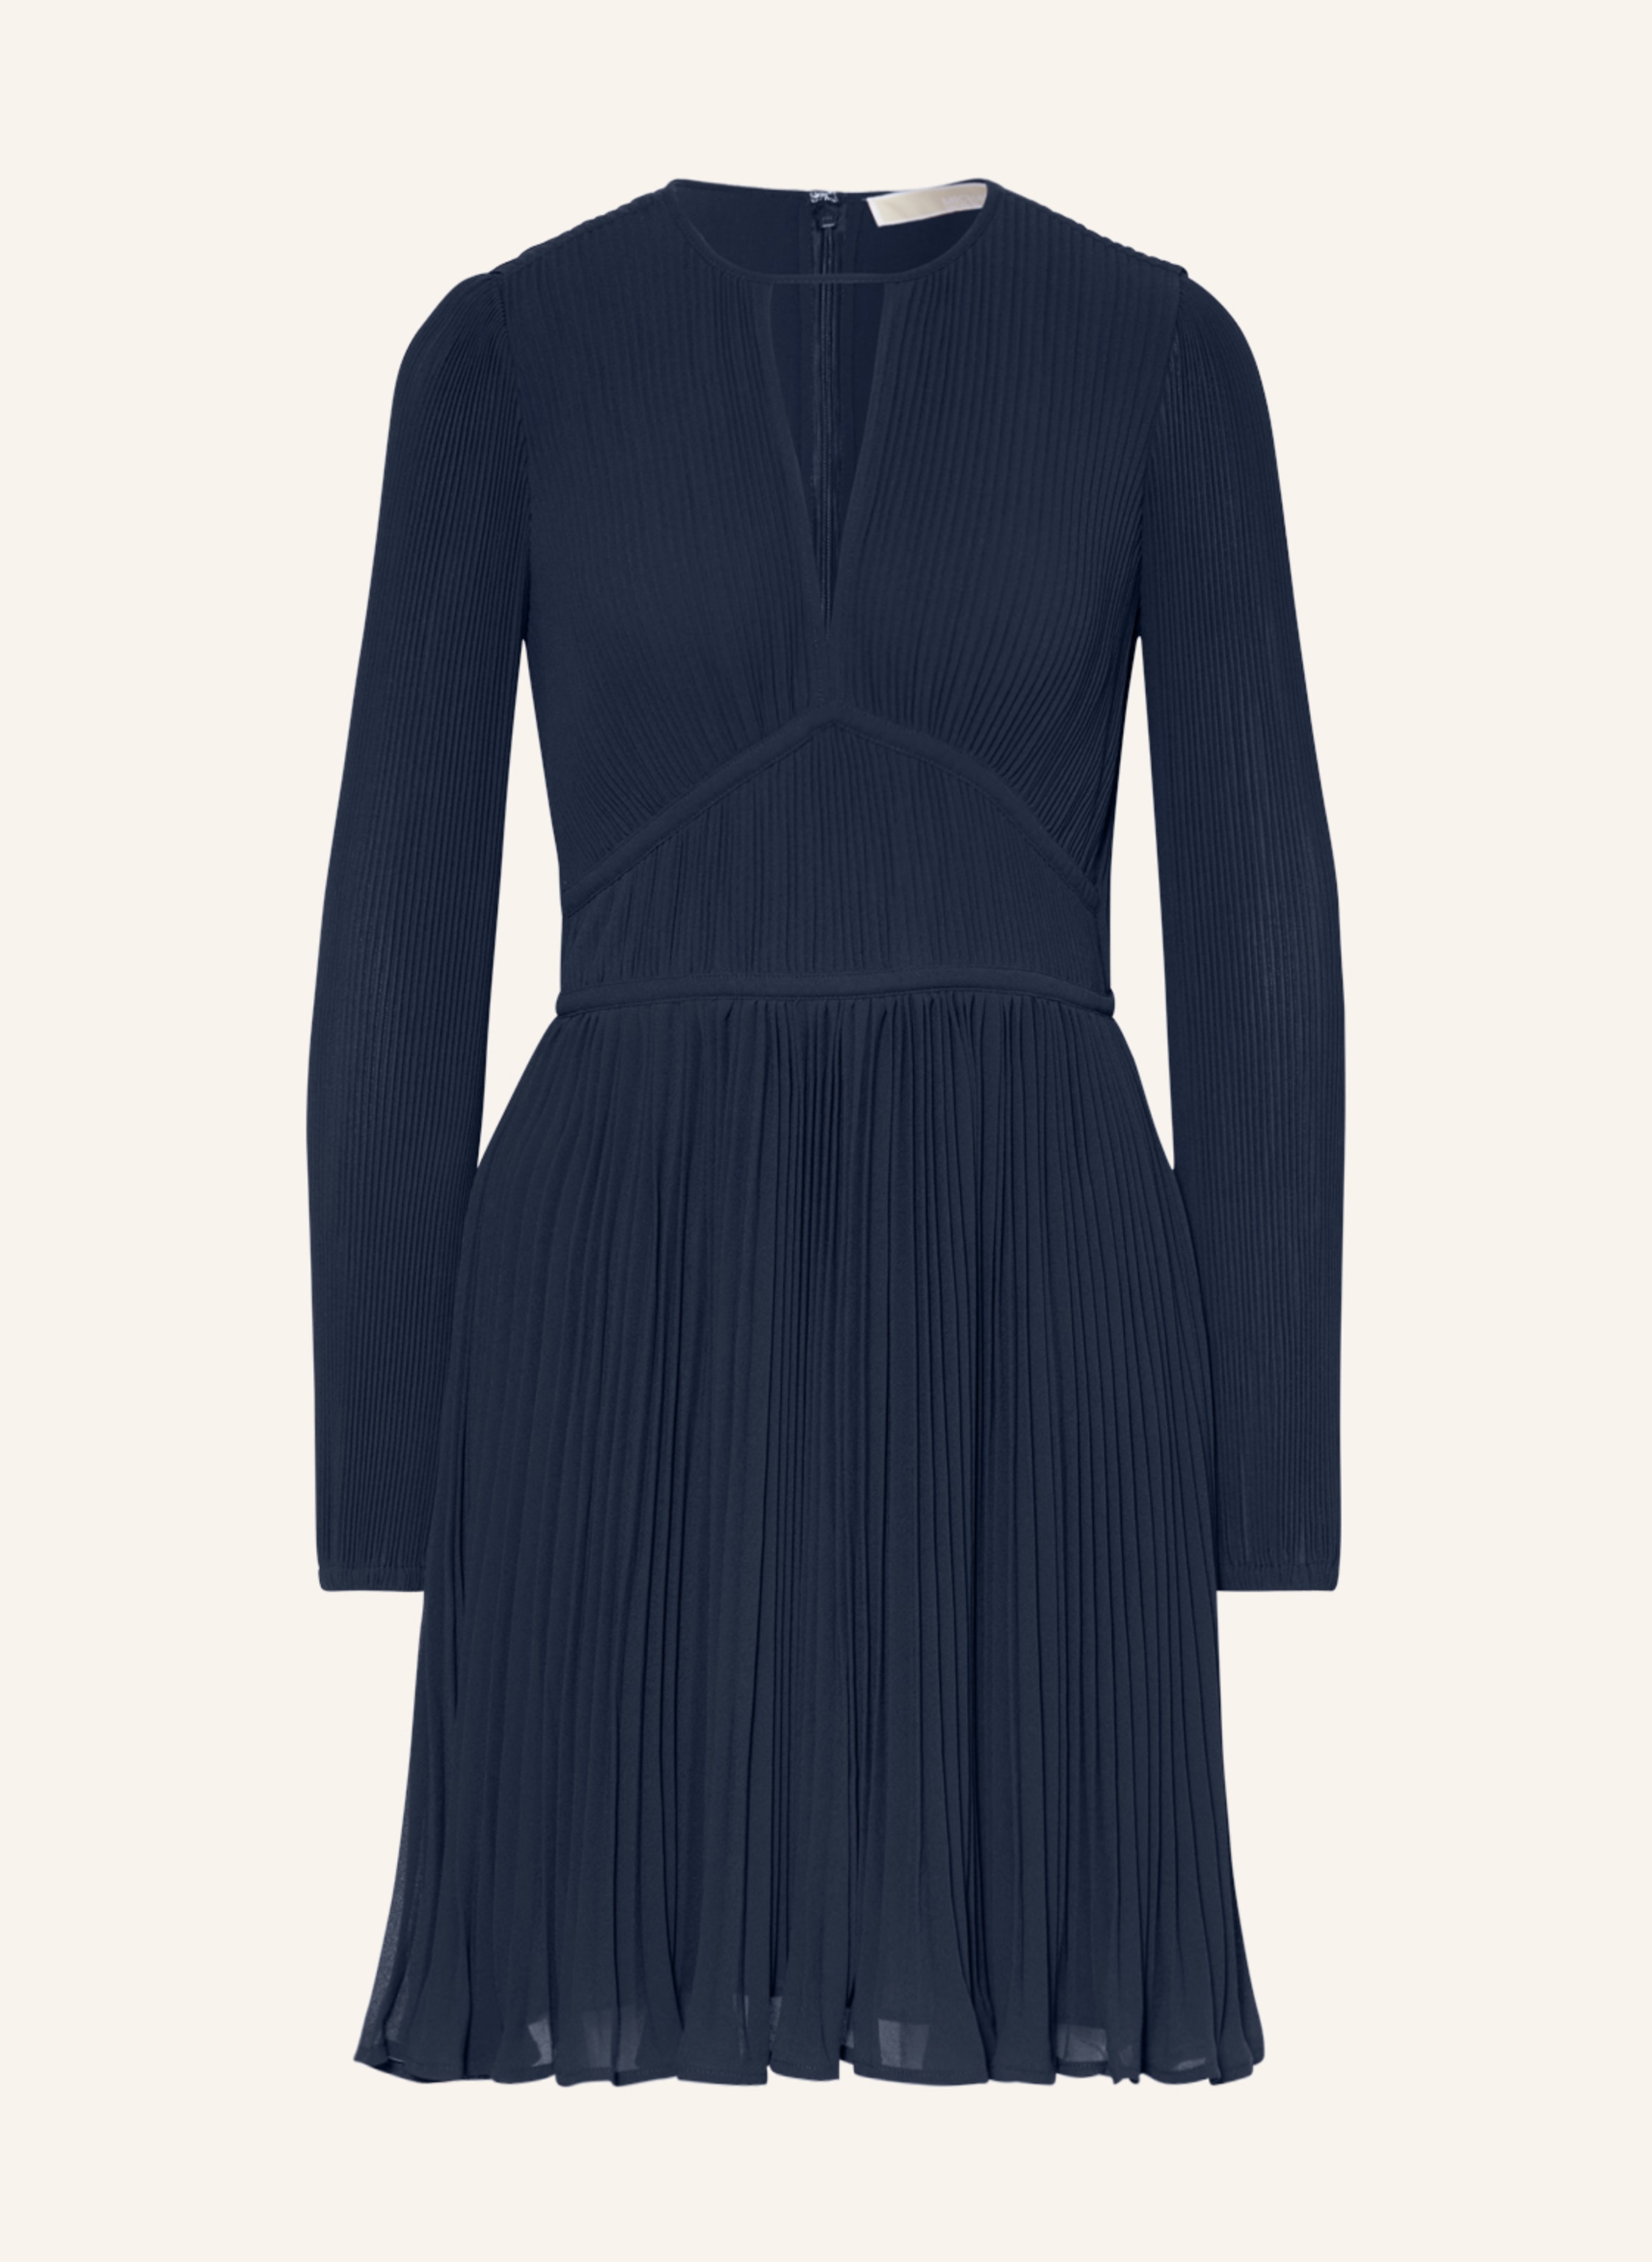 Michael kors Navy Blue Business Casual Dress size XXS